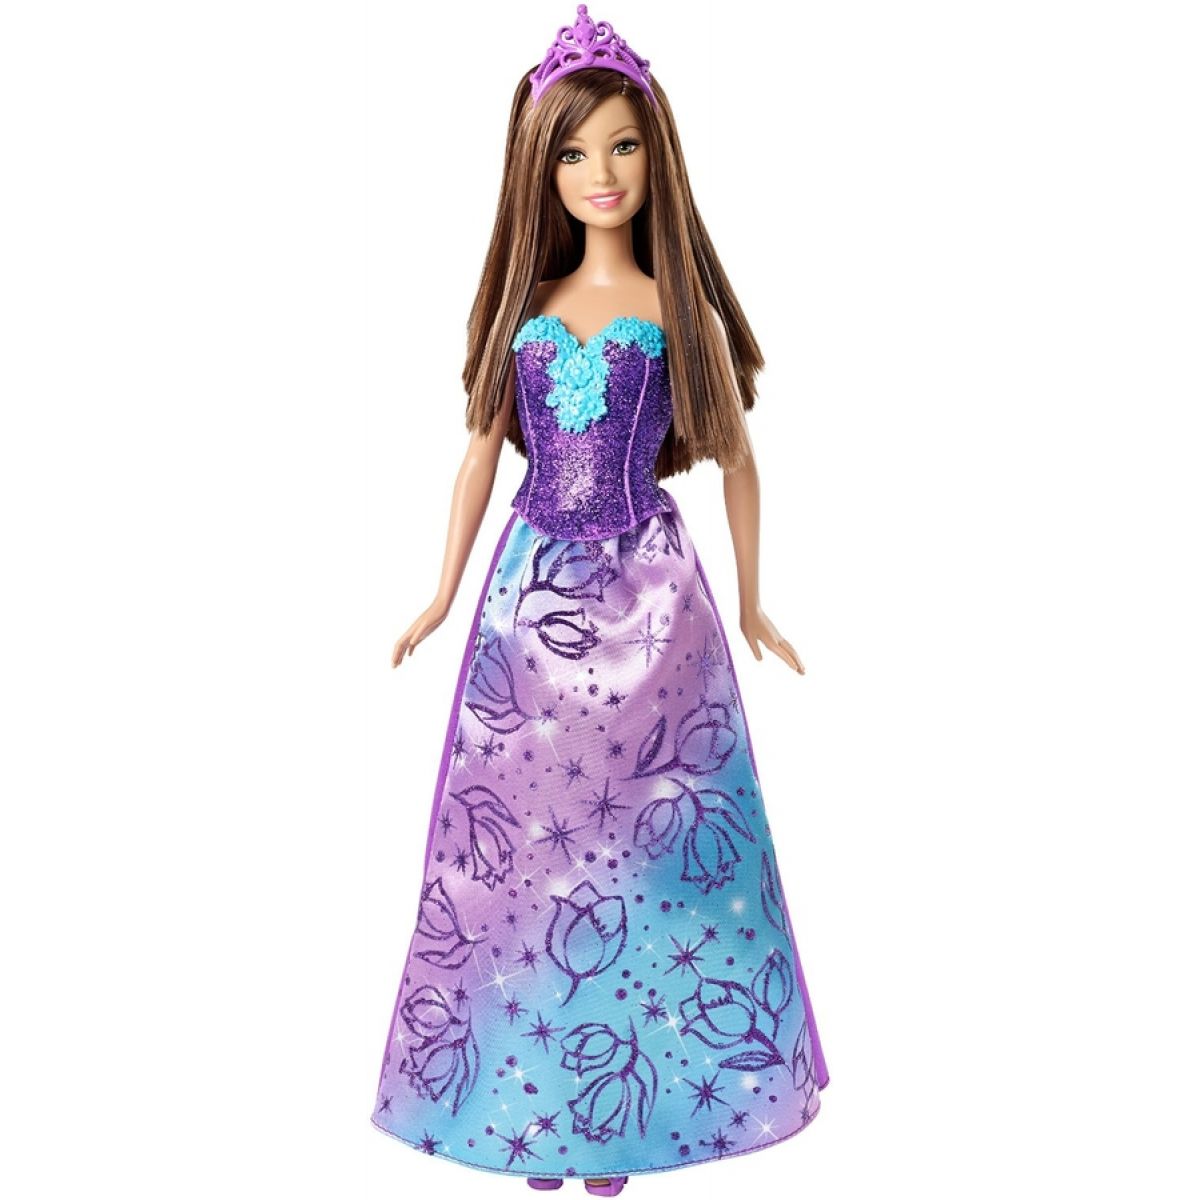 Barbie Princezna - Teresa CFF27